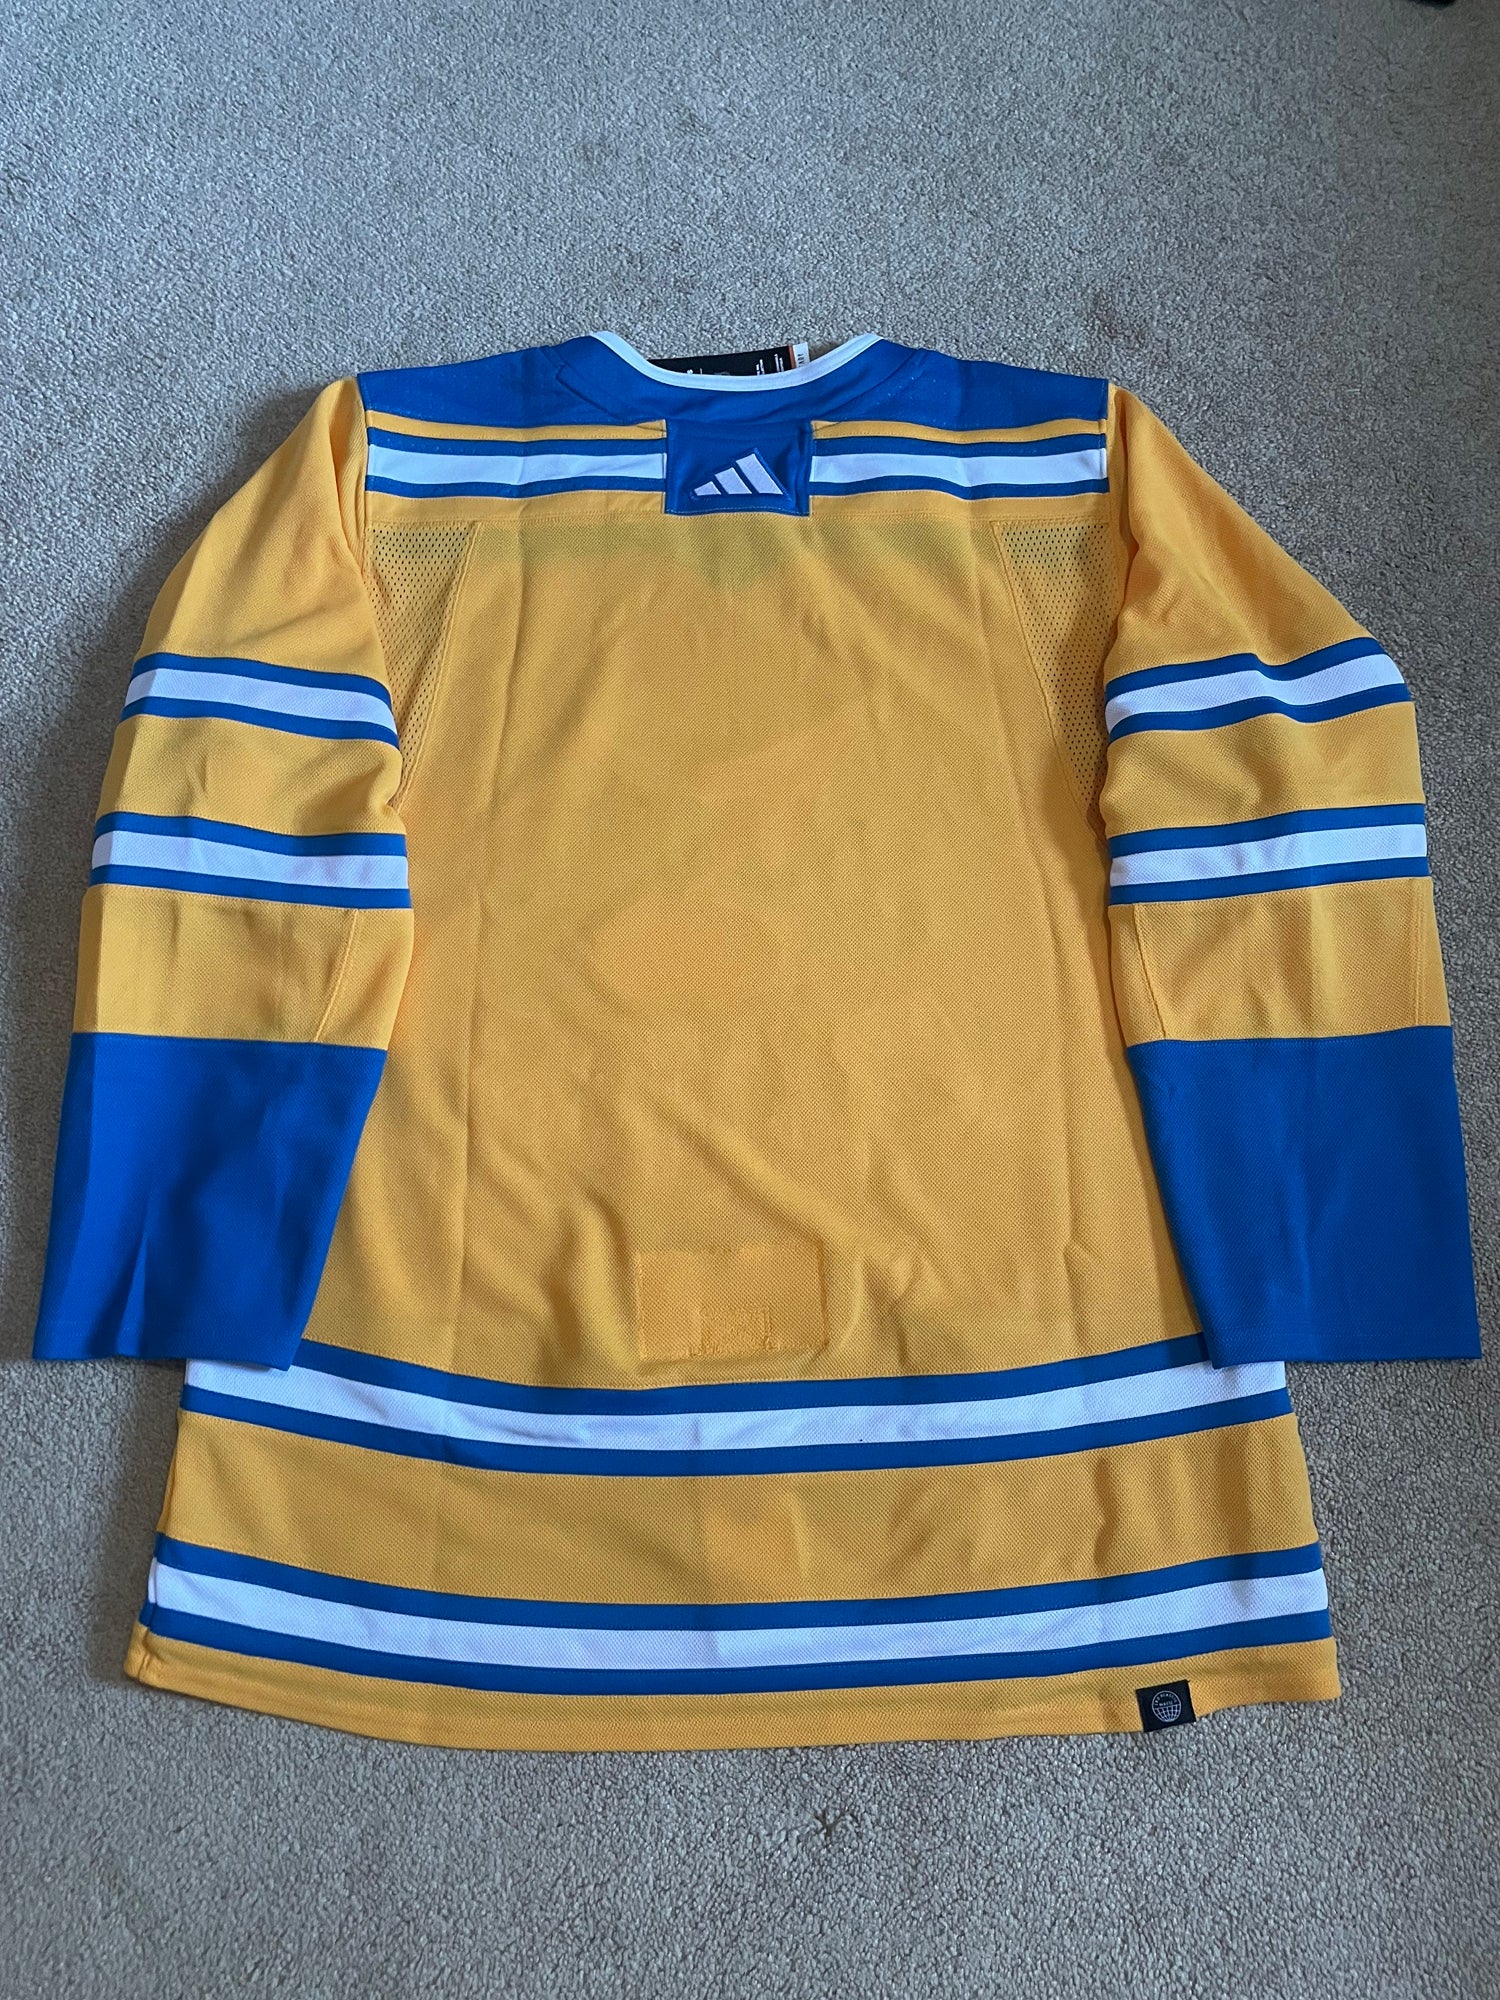 Adidas John Marino Pittsburgh Penguins Reverse Retro NHL Hockey Jersey 50